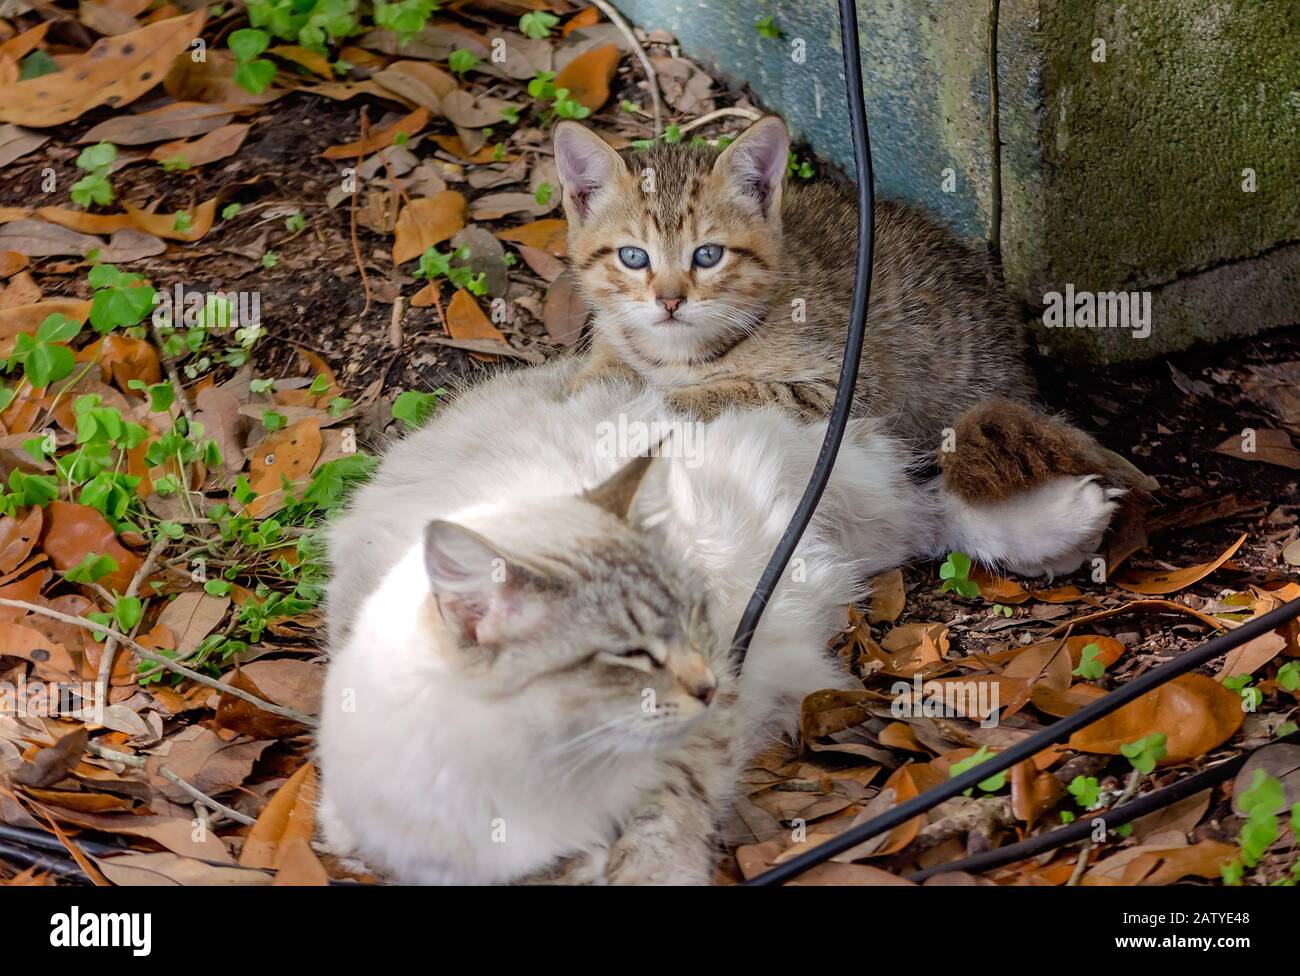 A mother cat lays beside her six-week-old tabby kitten, Jan. 30, 2020, in Coden, Alabama. Stock Photo